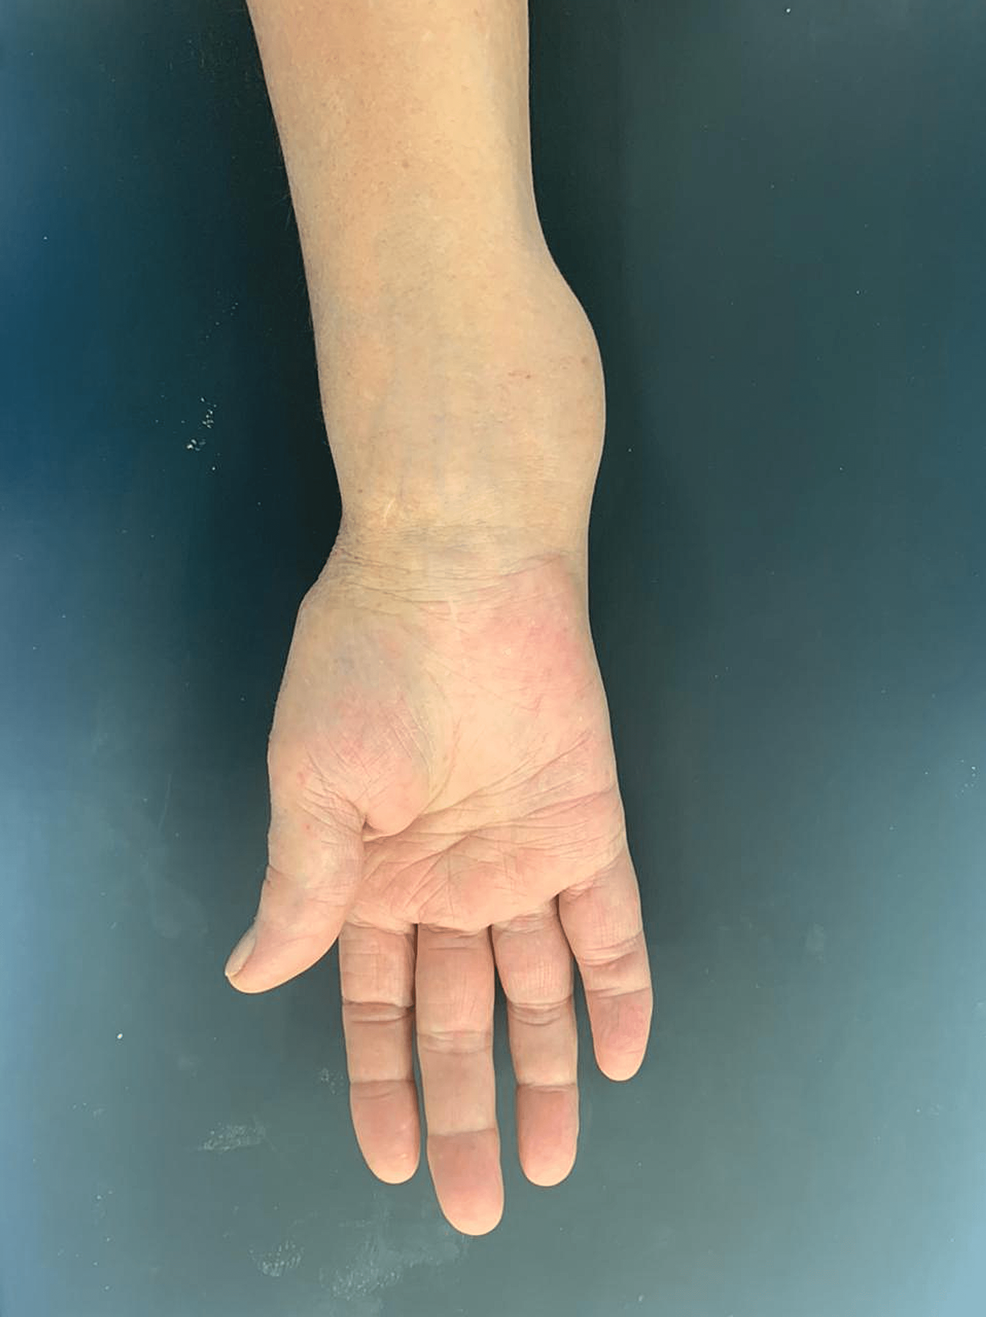 rheumatoid nodules wrist